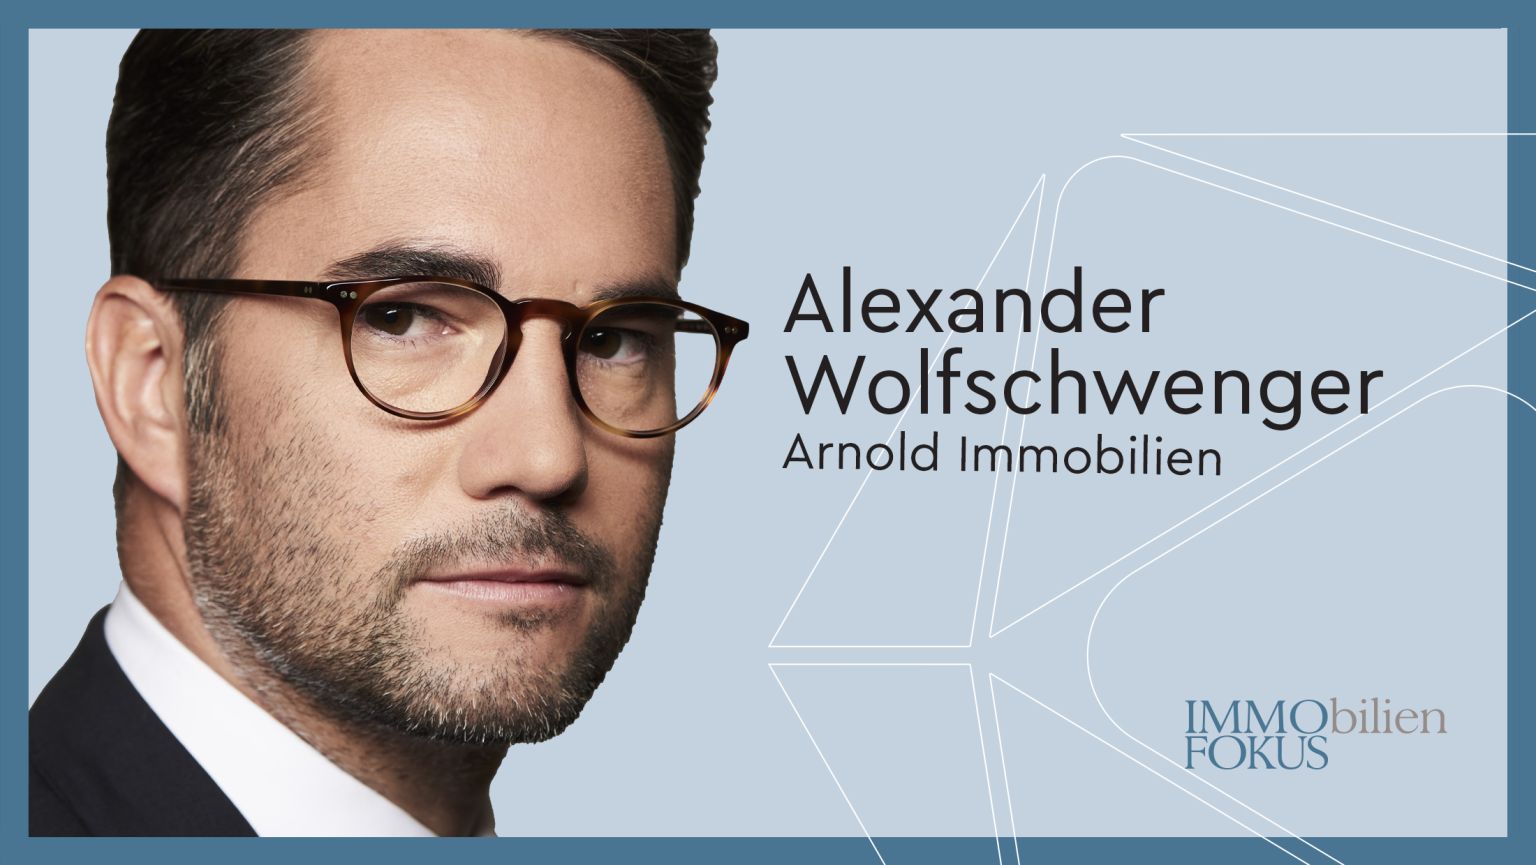 Arnold Immobilien: Alexander Wolfschwenger ist neuer Head of Residential